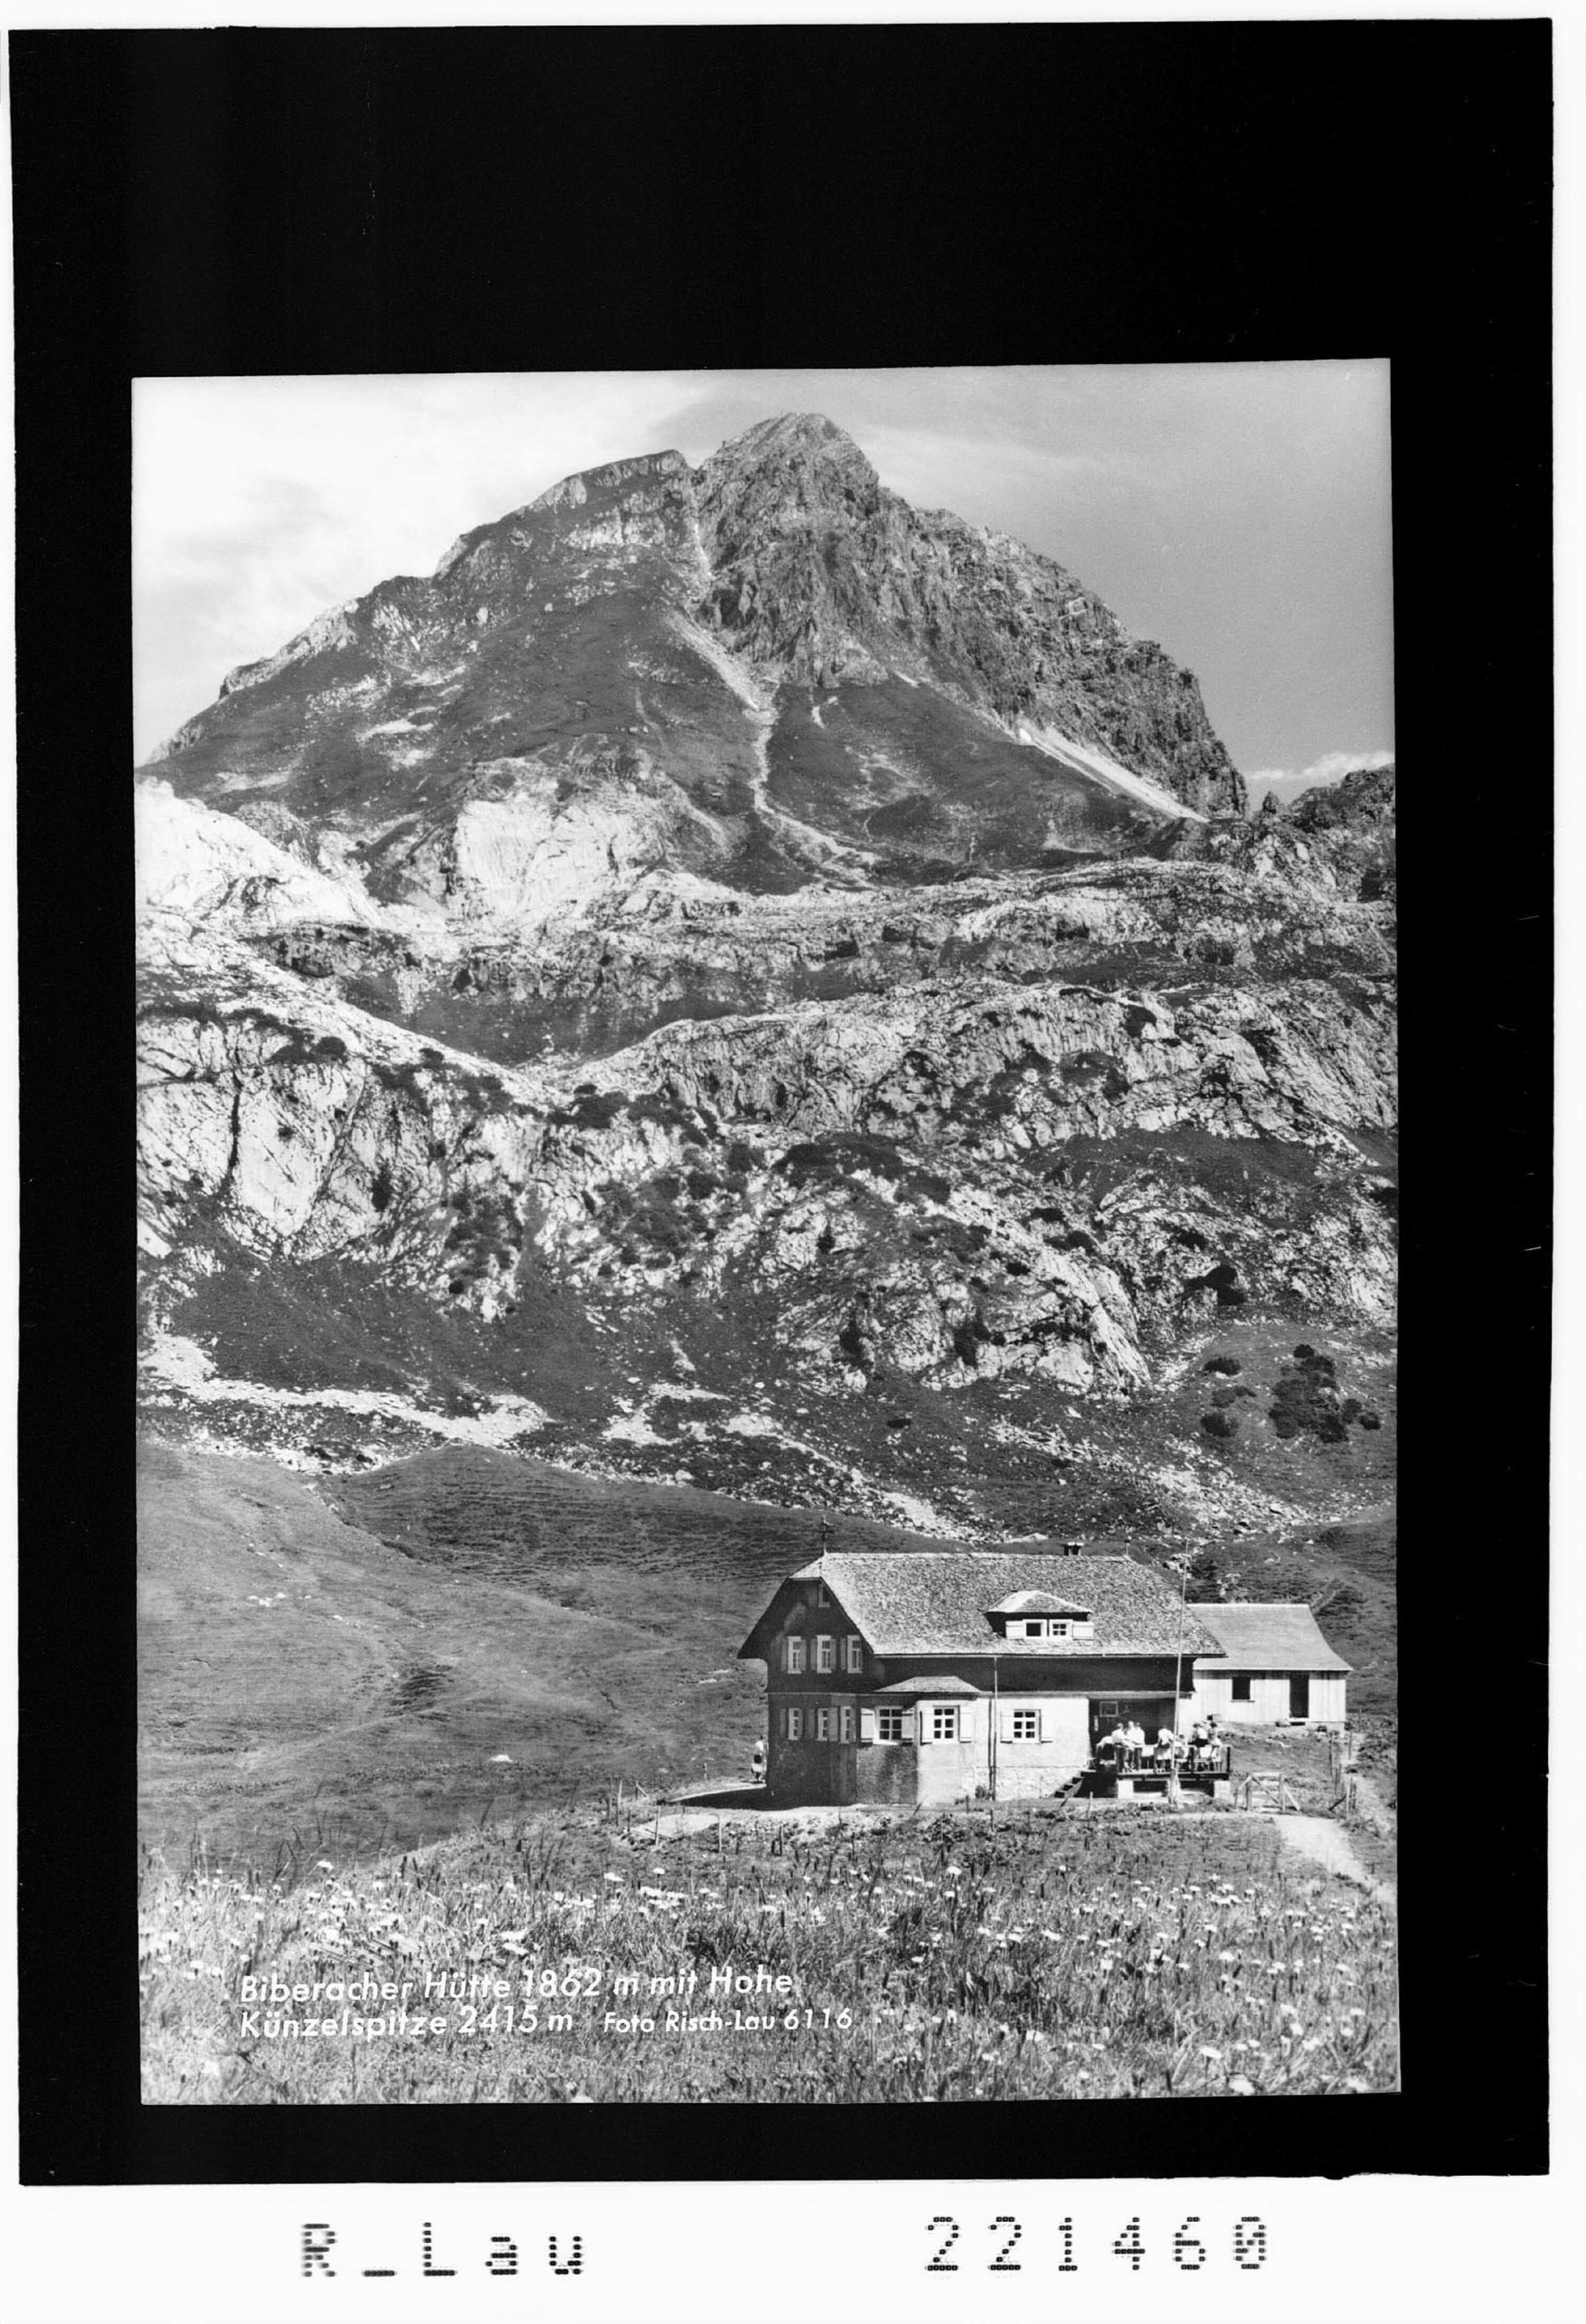 Biberacher Hütte 1862 m mit Hohe Künzelspitze 2415 m></div>


    <hr>
    <div class=